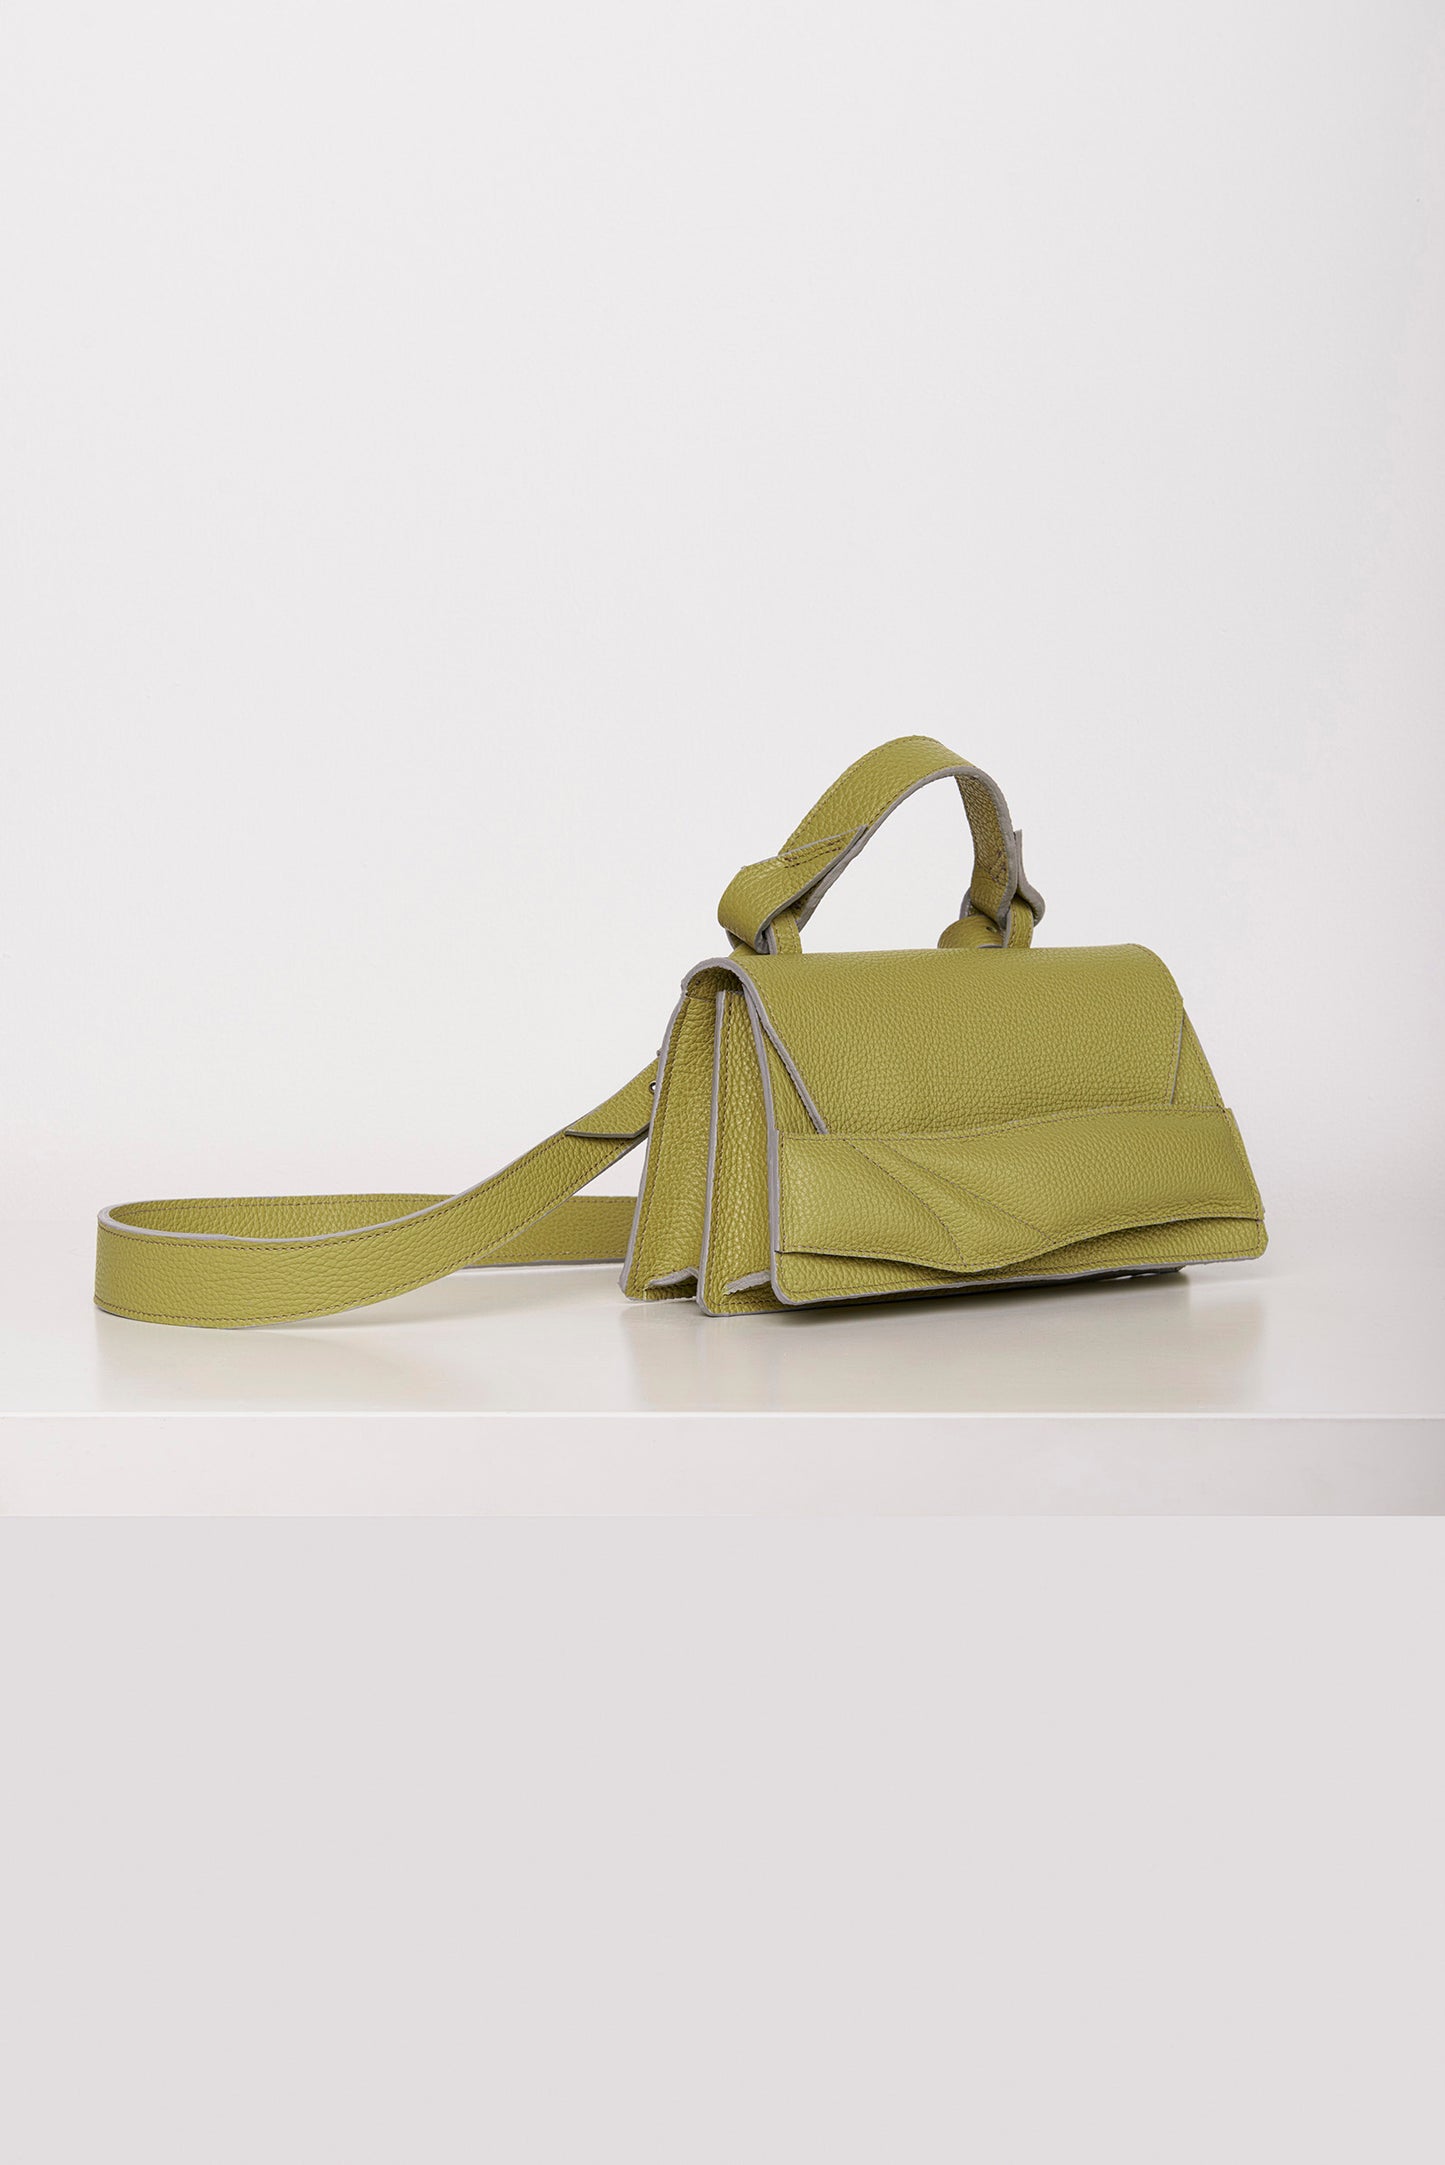 Mini Balance Bag - Lime Green - Personalization